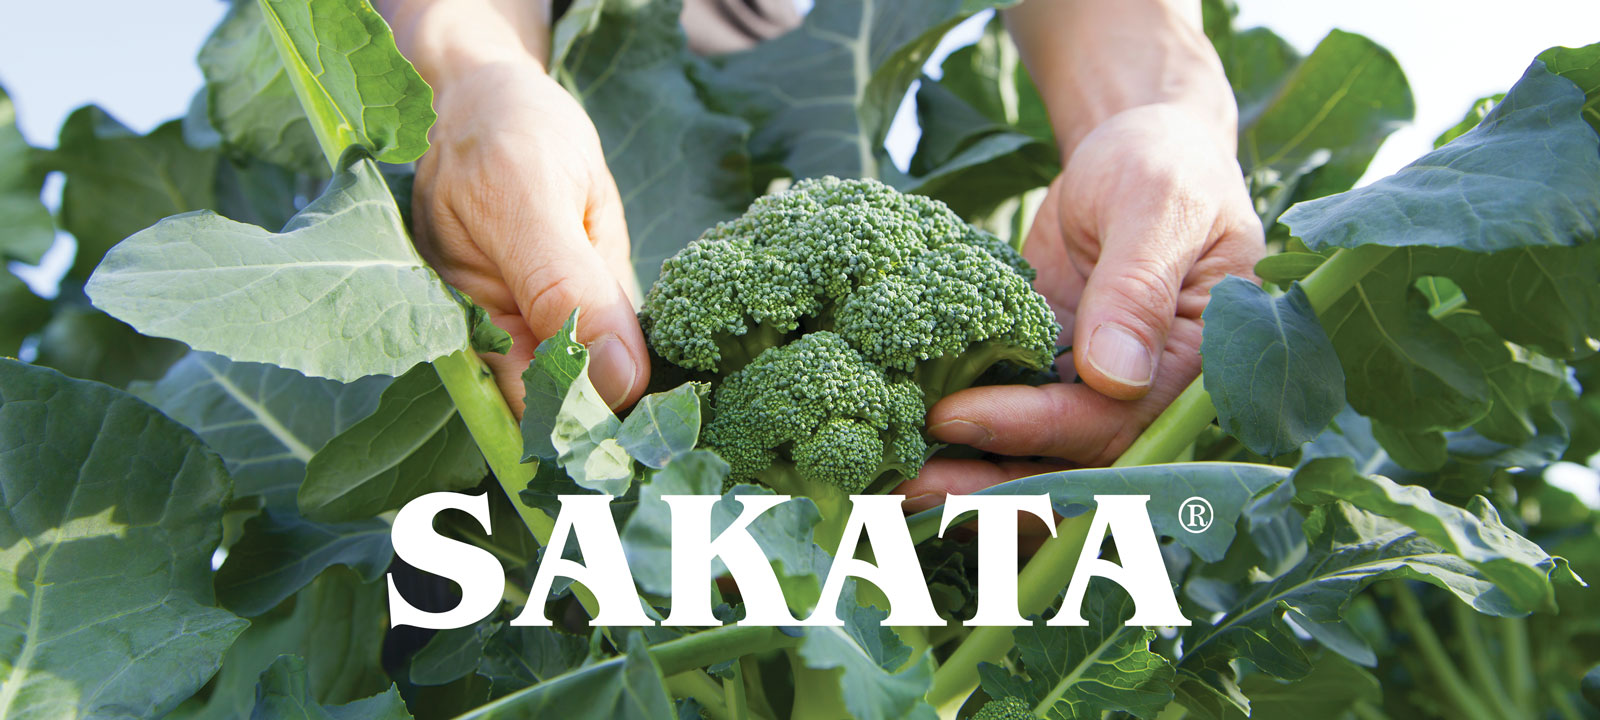 Scarlet Star - Sakata Wholesale Vegetable Seed